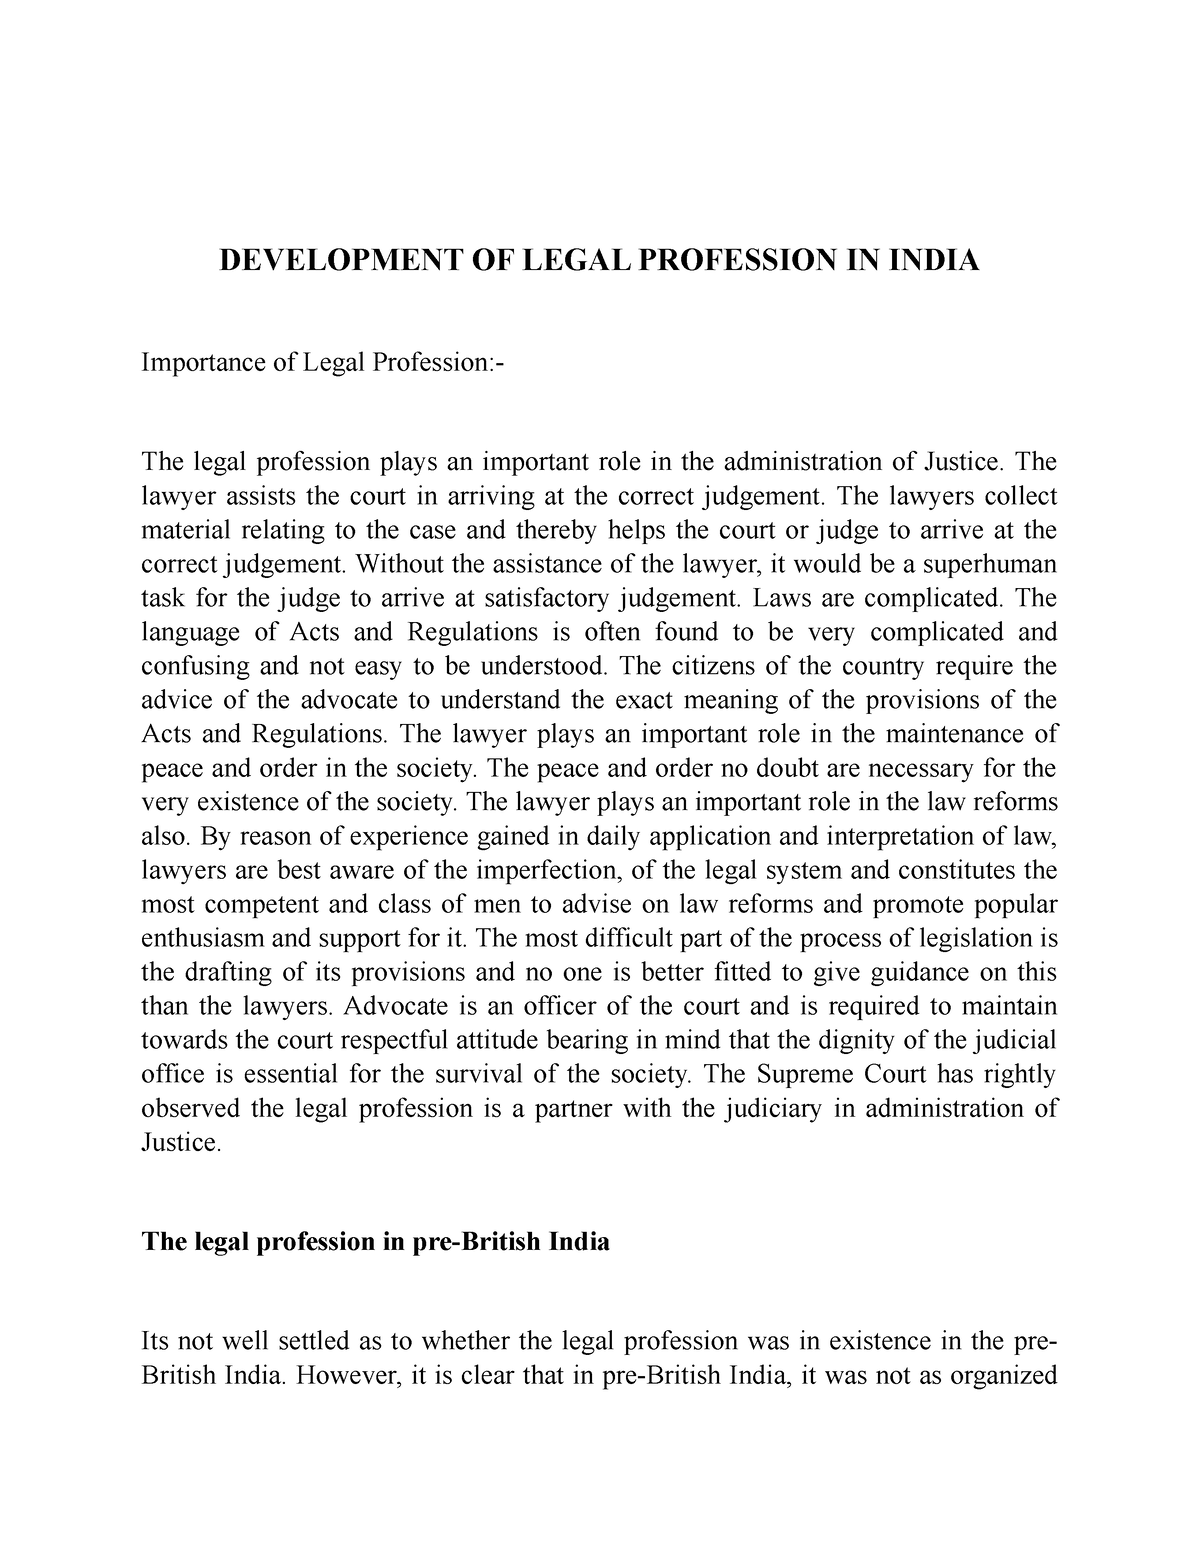 dissertation topics in corporate law in india